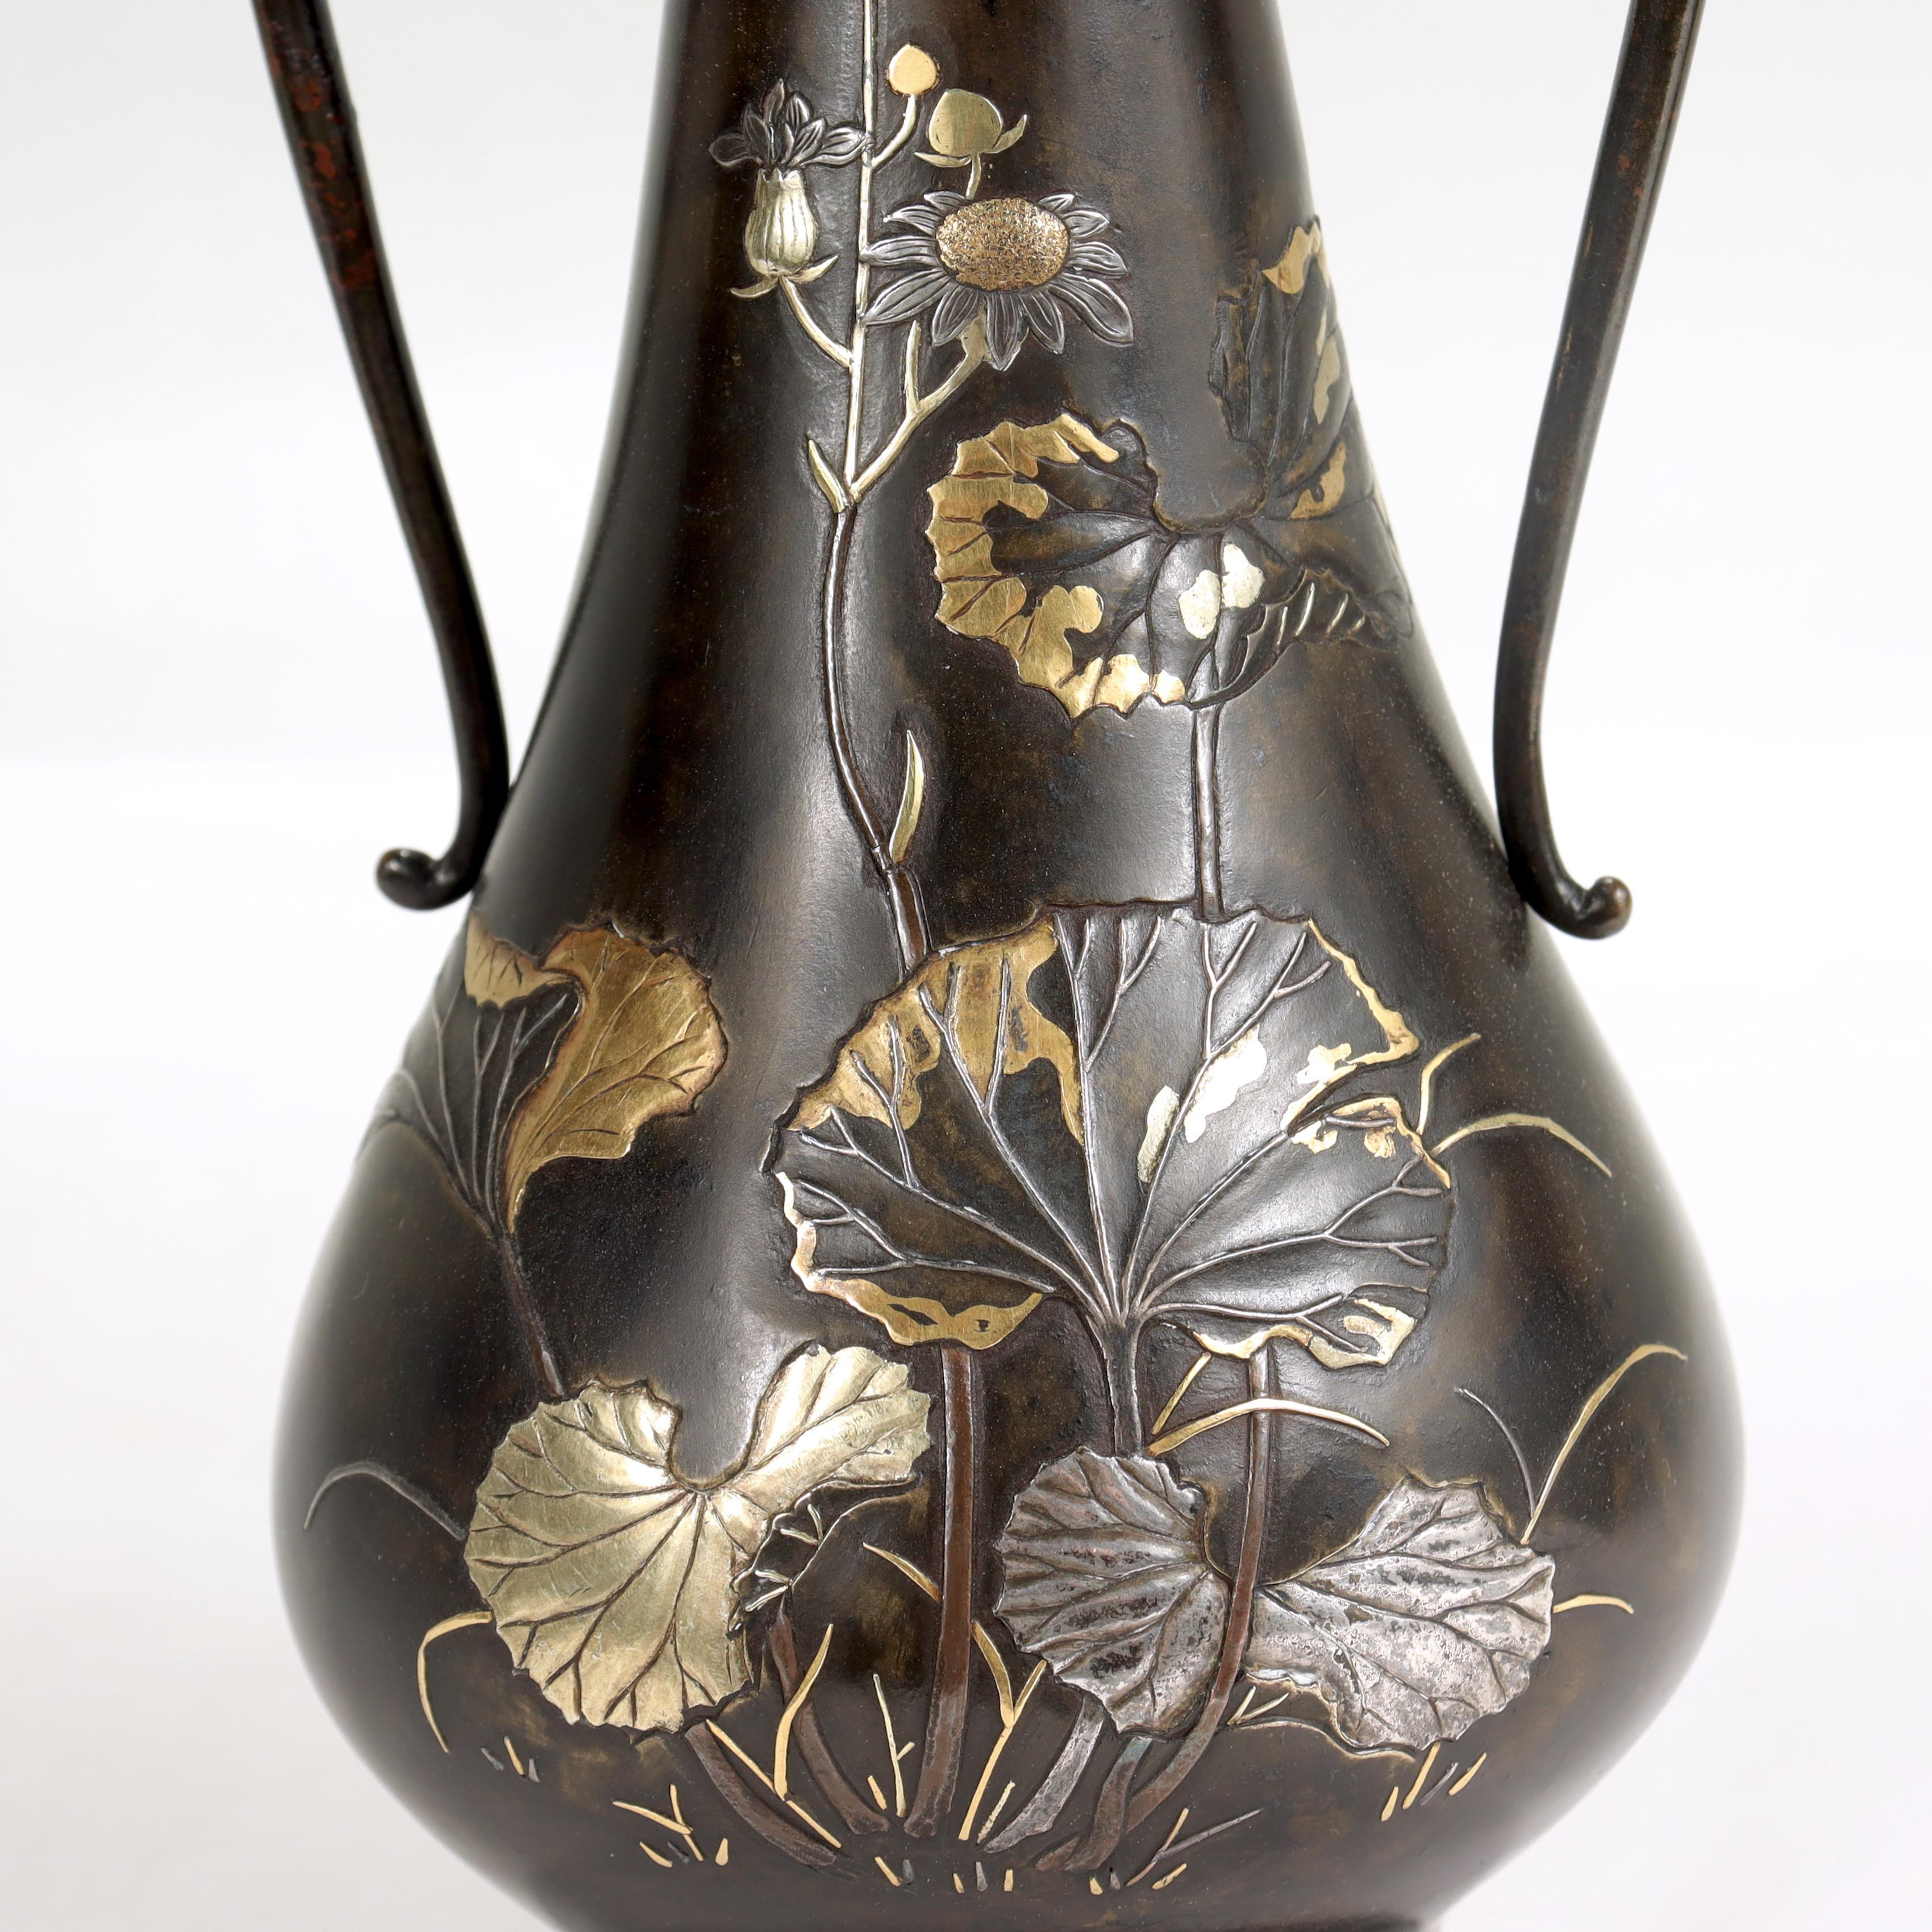 20th Century Antique Japanese Inlaid Bronze & Mixed Metals Handled Butterbur Flower Vase